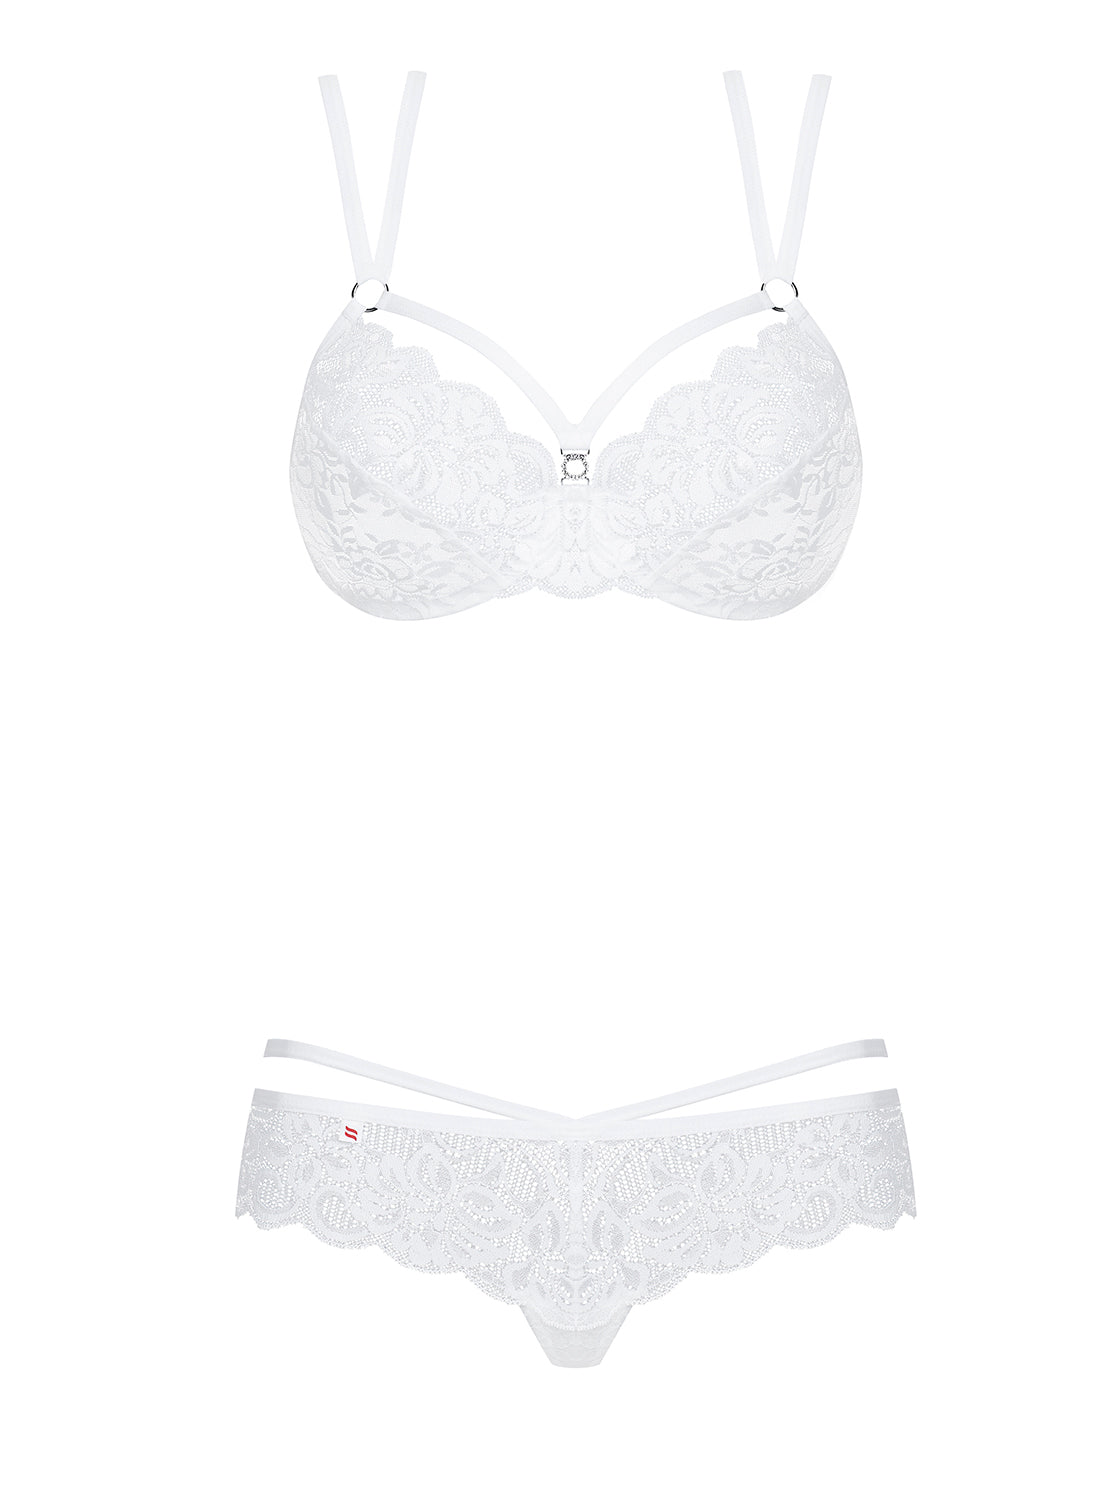 Sensual bra set made of white lace with beautiful rose pattern